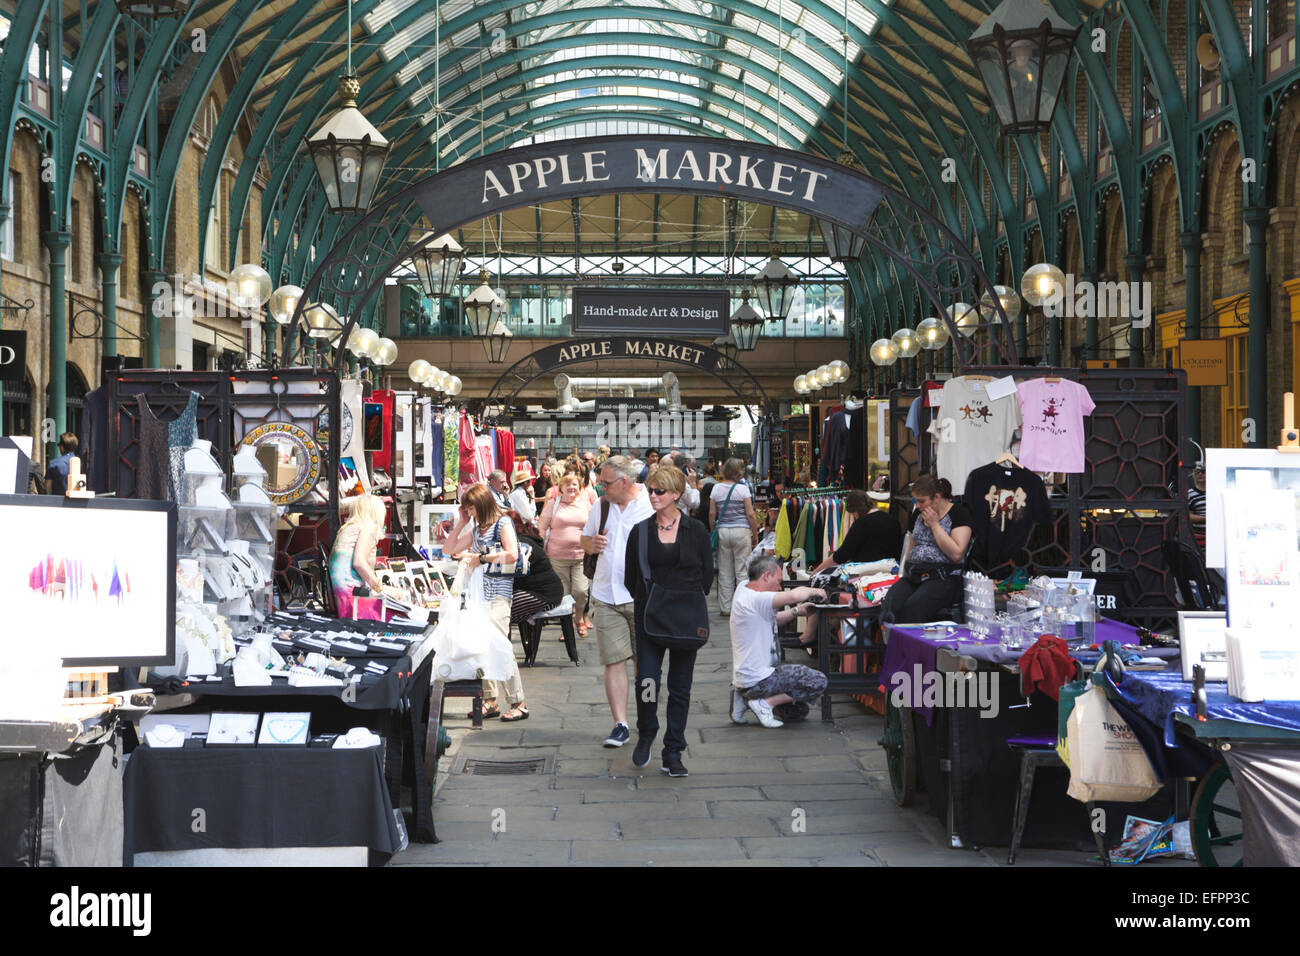 Covent Garden, Apple Market, London, UK. Shoppers browsing market stalls. Stock Photo